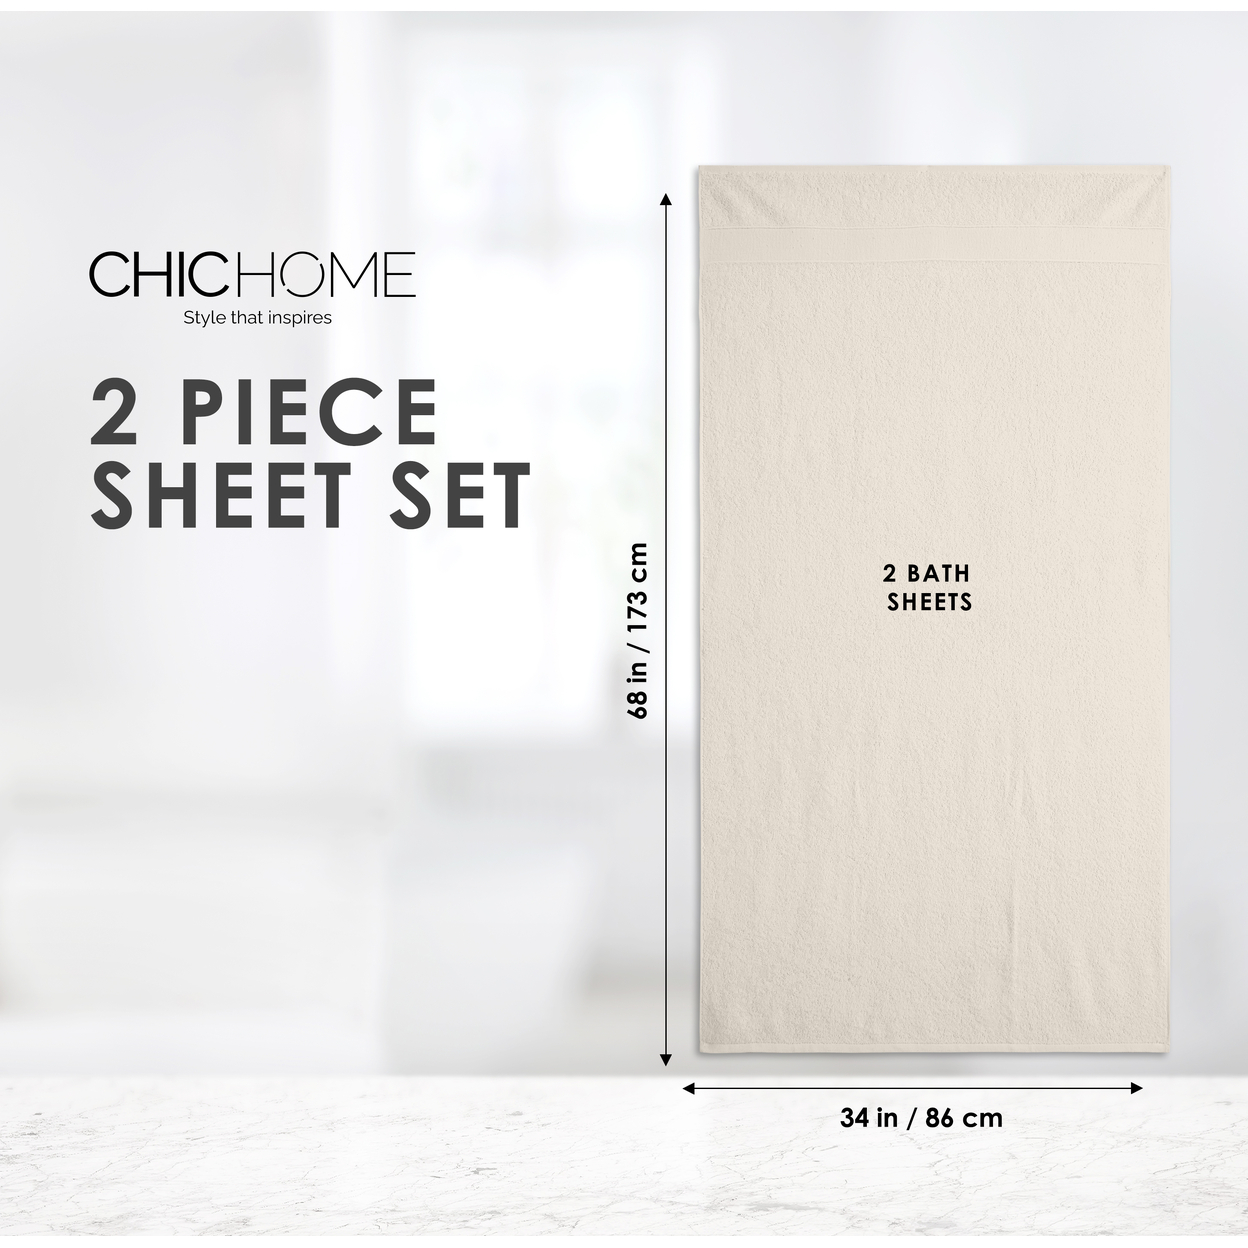 Chic Home Luxurious 2-Piece 100% Pure Turkish Cotton Bath Sheet Towels, 30x68, Woven Dobby Border Design, OEKO-TEX Certified Set - Grey